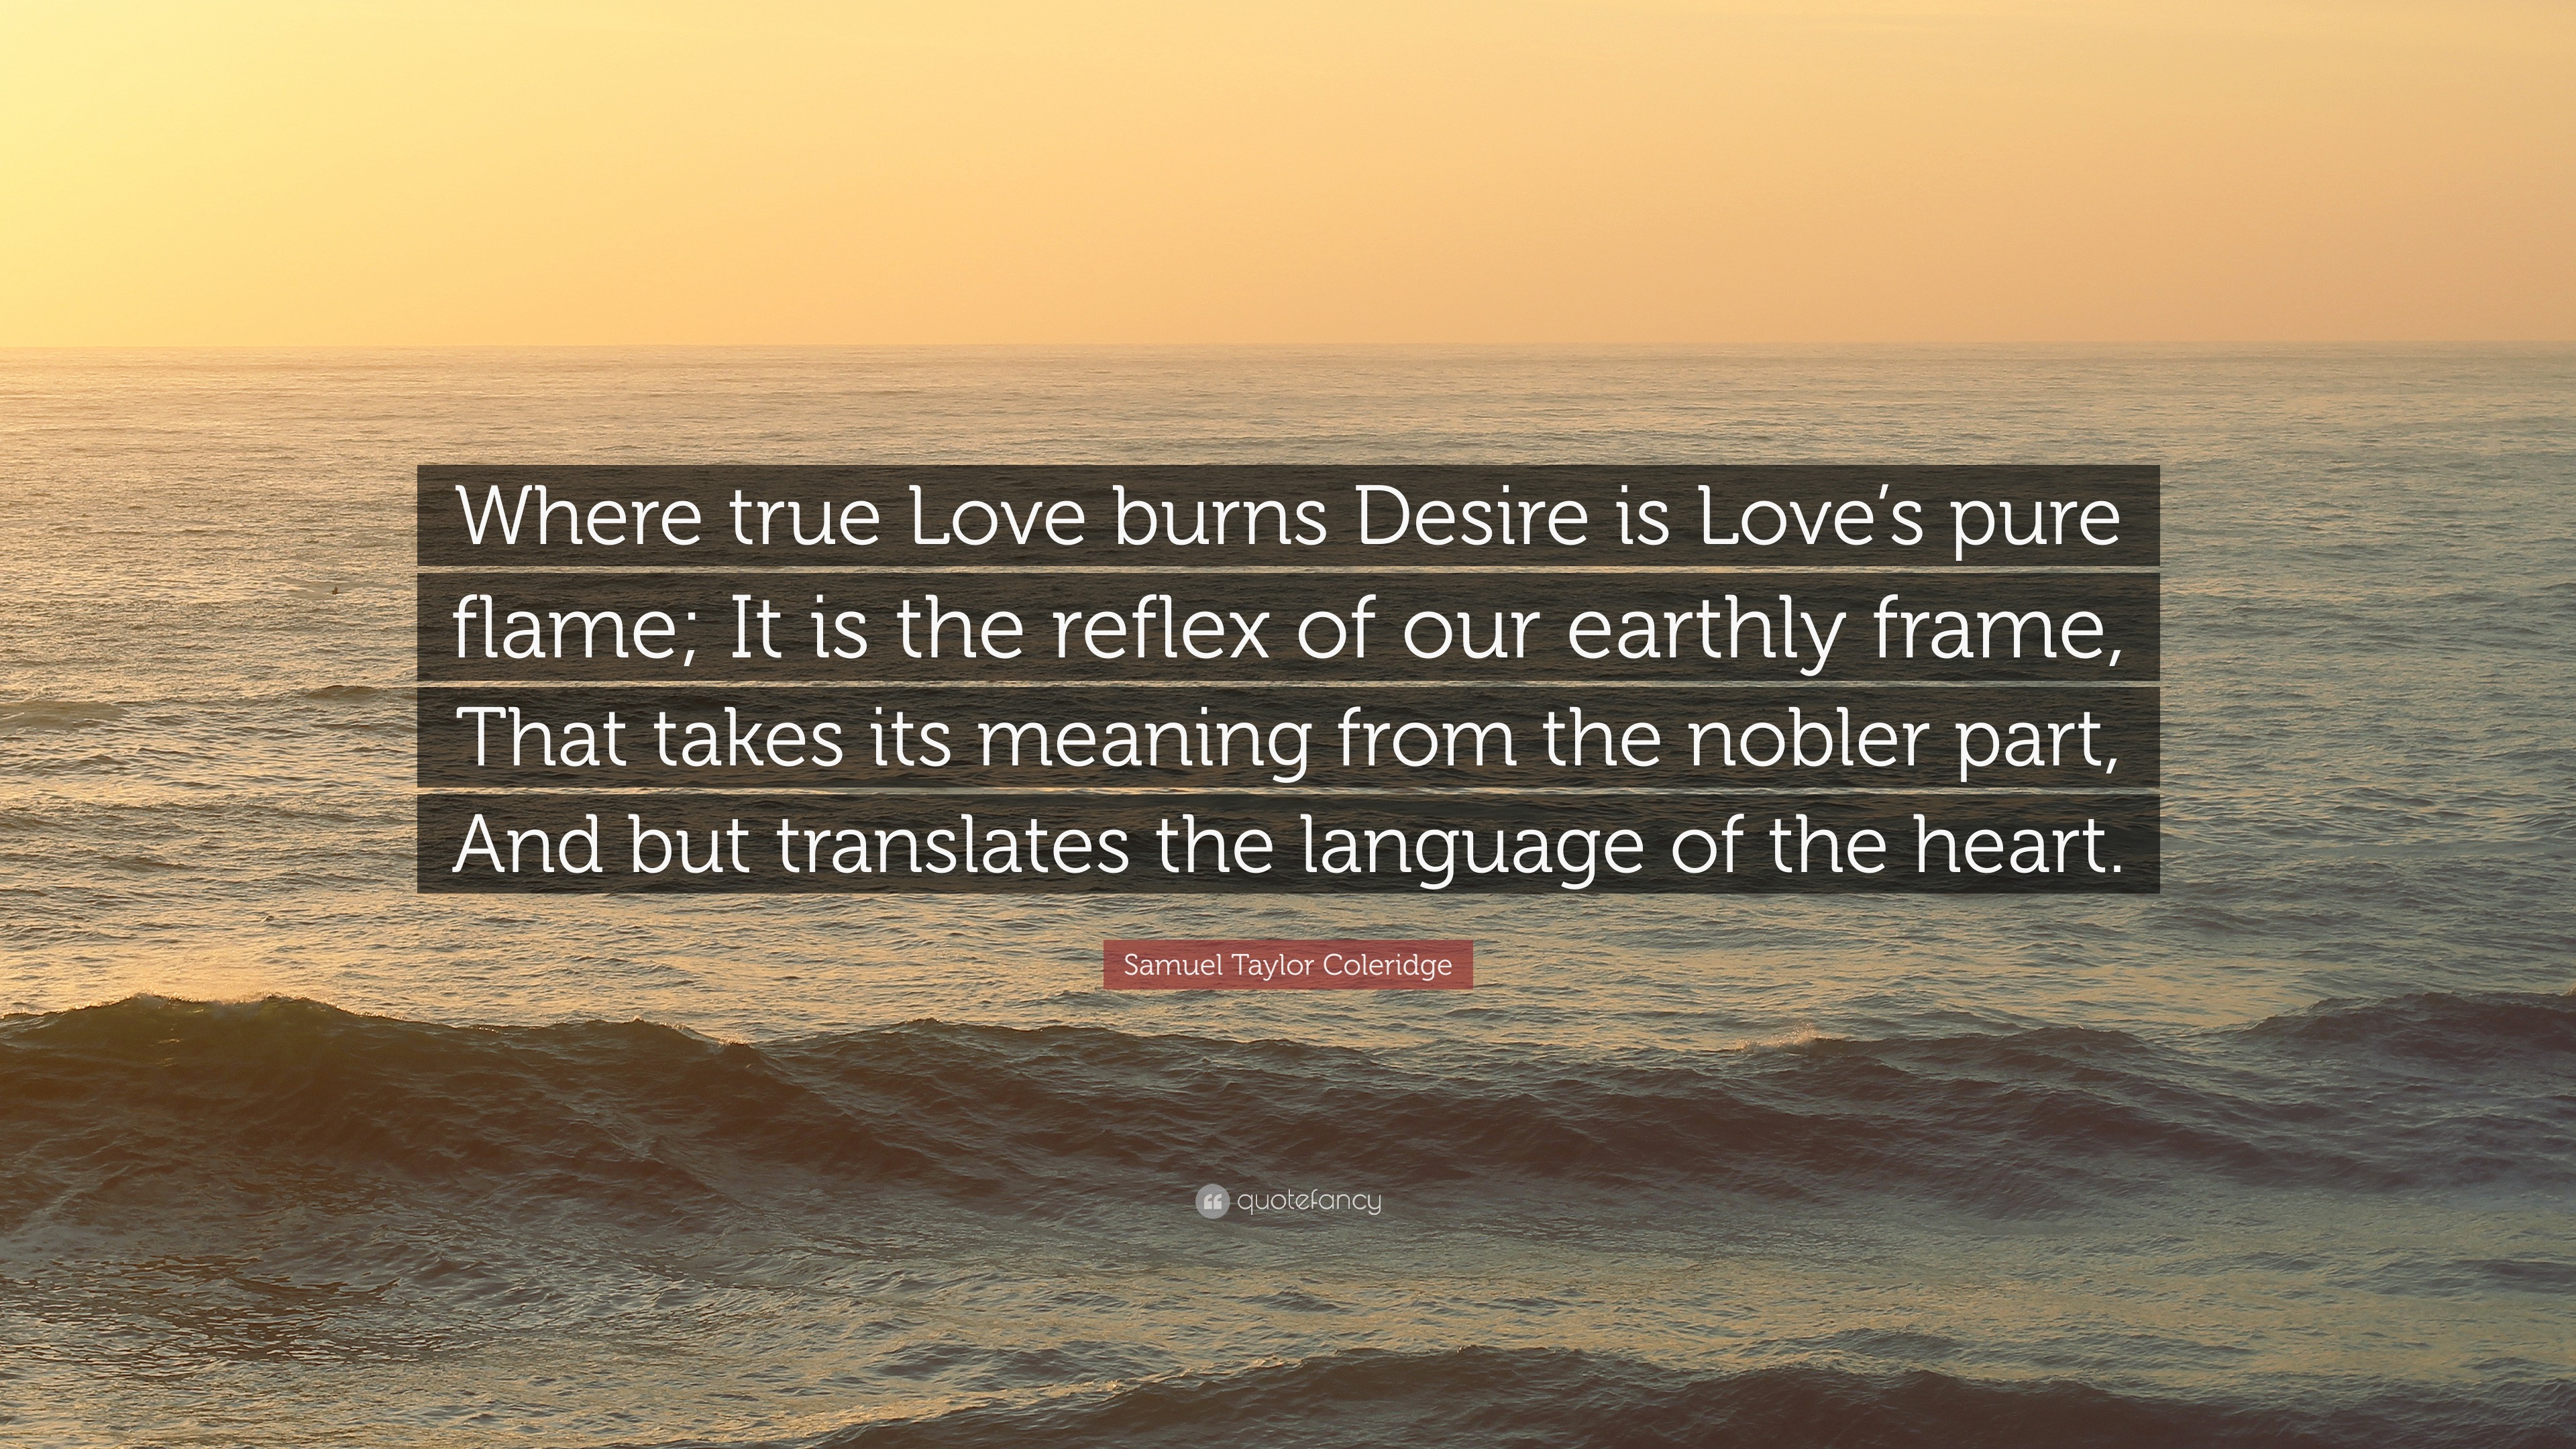 Samuel Taylor Coleridge Quote “Where true Love burns Desire is Love s pure flame